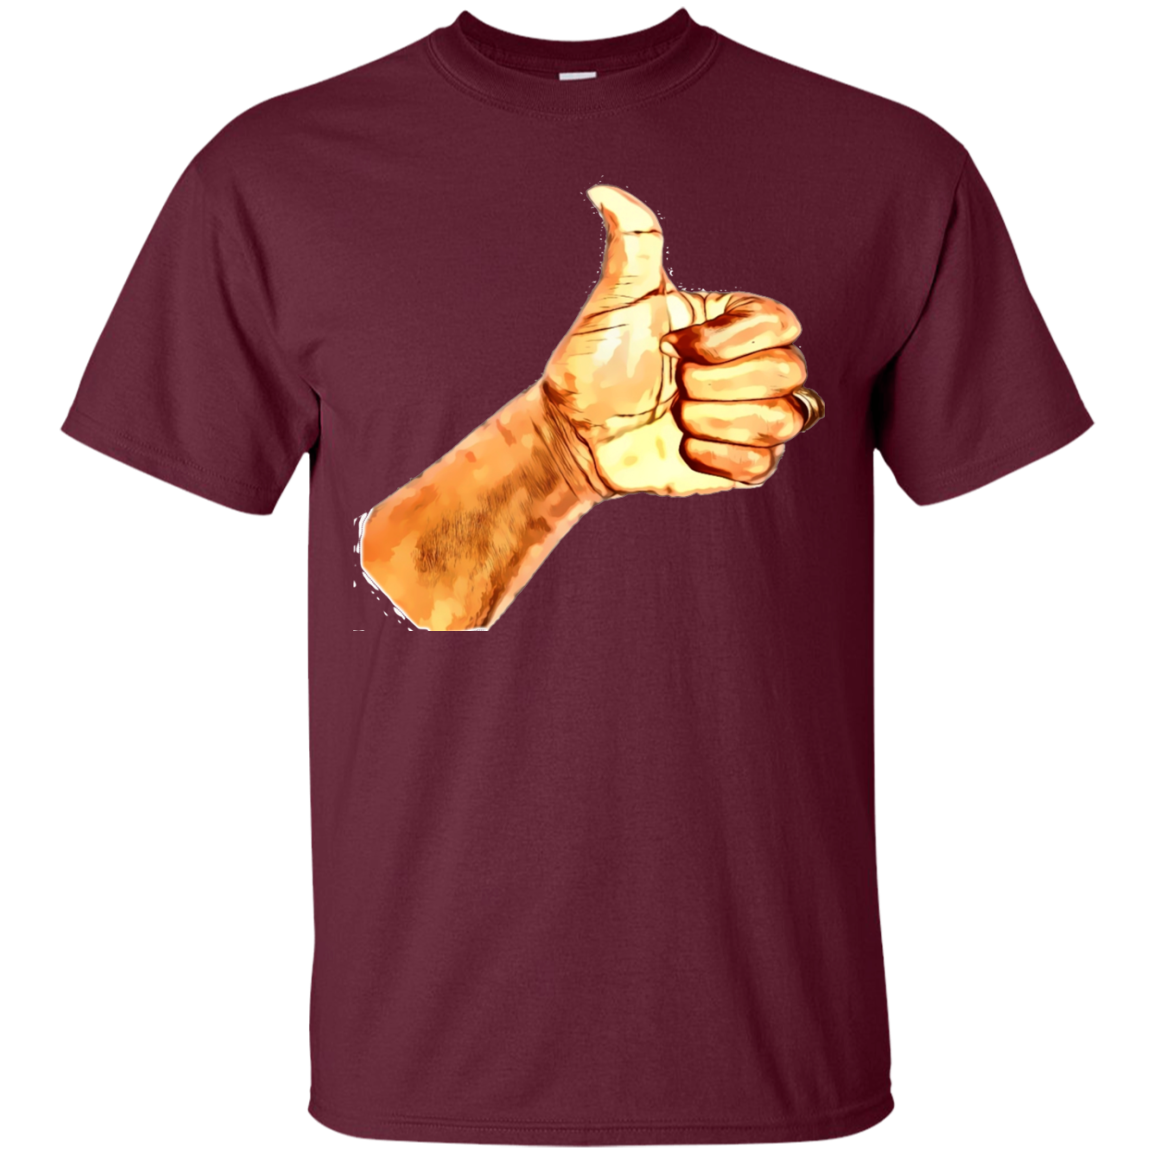 Thumb Up Cotton T-Shirt